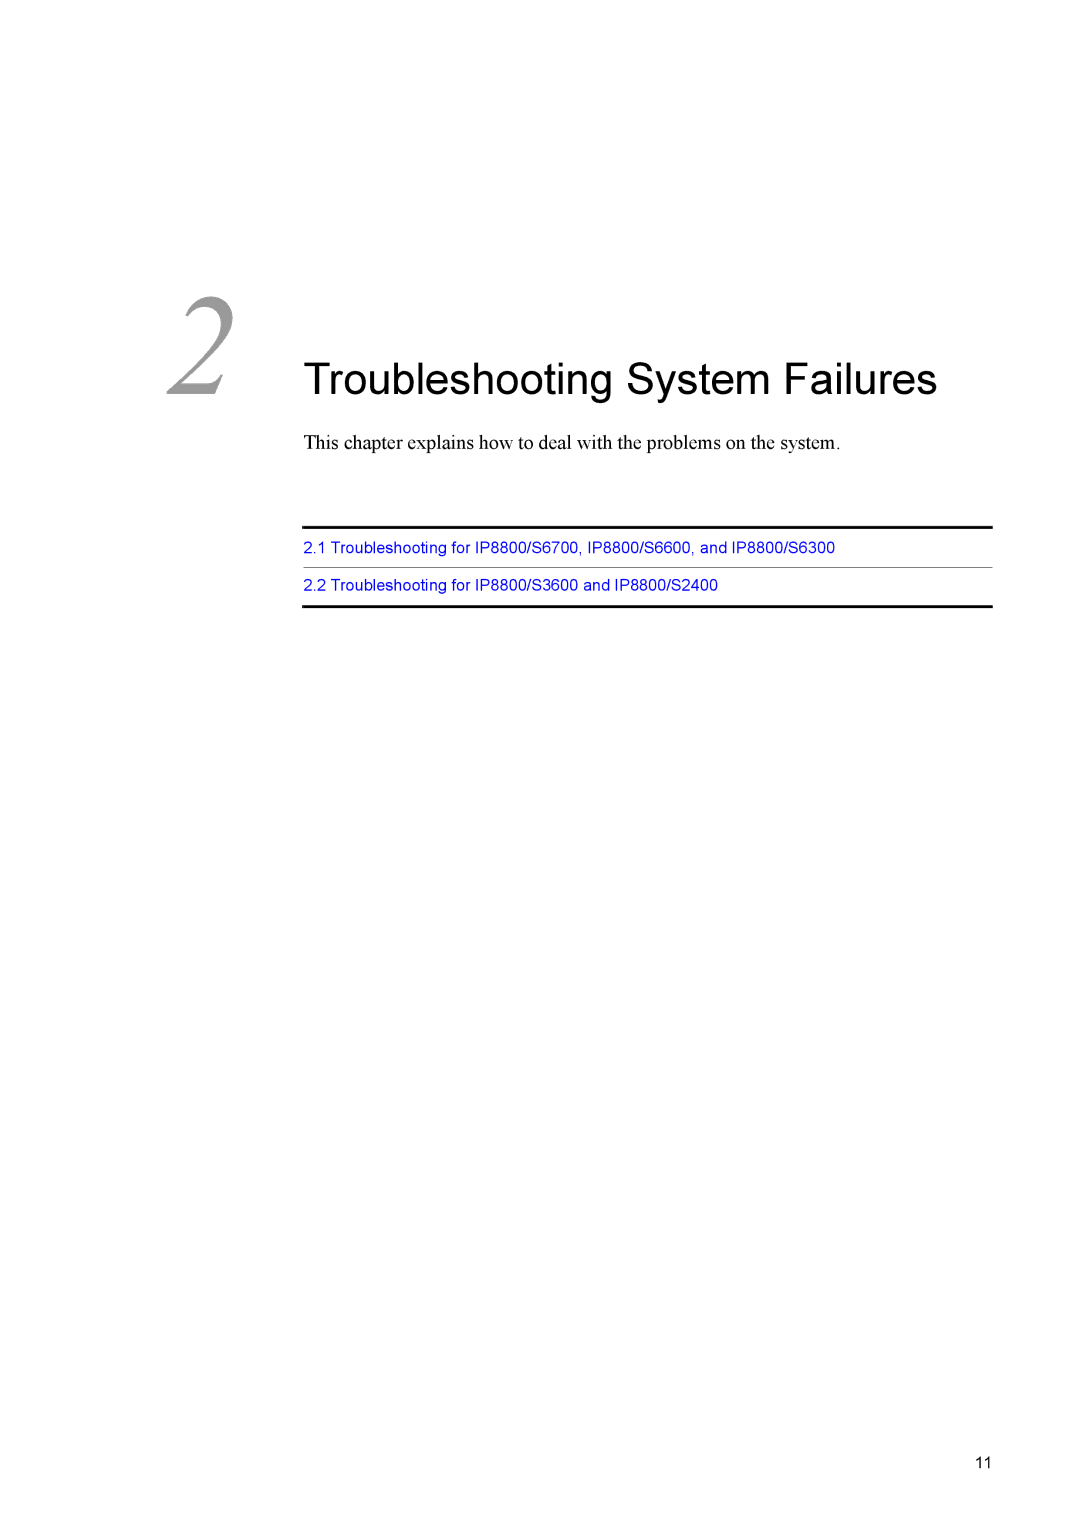 NEC IP8800/S6700, IP8800/S6600, IP8800/S3600, IP8800/S2400, IP8800/S6300 manual Troubleshooting System Failures 